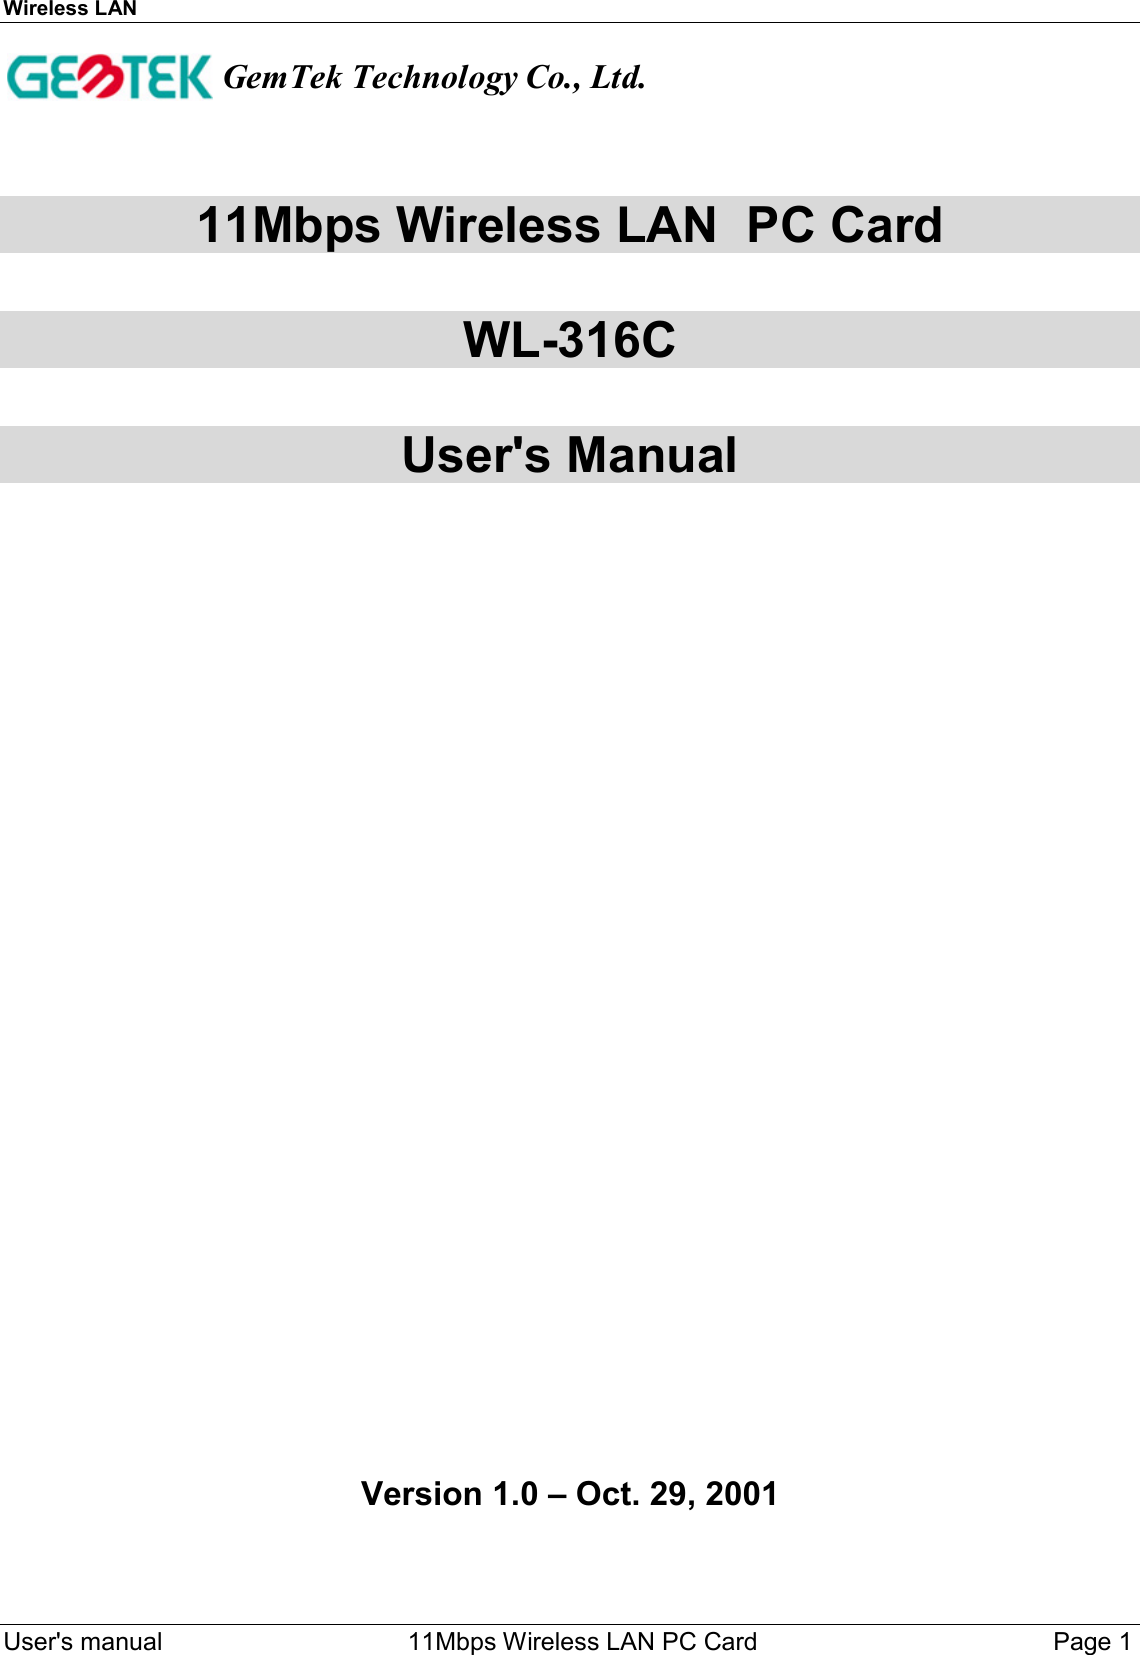 Wireless LAN  User&apos;s manual    11Mbps Wireless LAN PC Card Page 111Mbps Wireless LAN  PC CardWL-316CUser&apos;s Manual   Version 1.0 – Oct. 29, 2001GemTek Technology Co., Ltd.